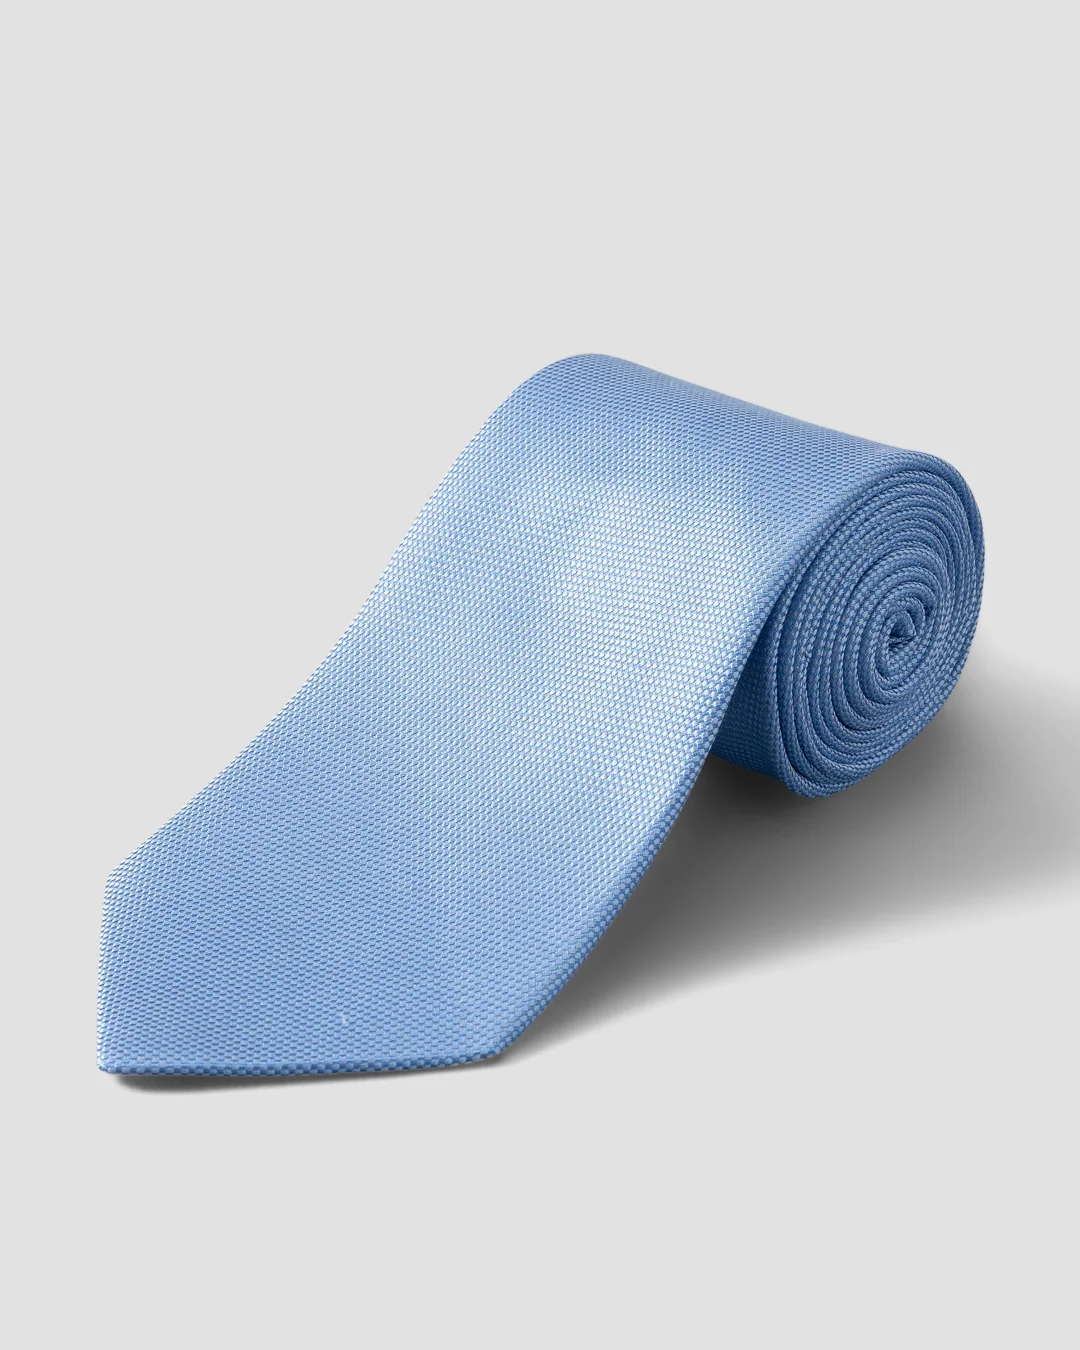 Blue Basketweave Tie - Eton